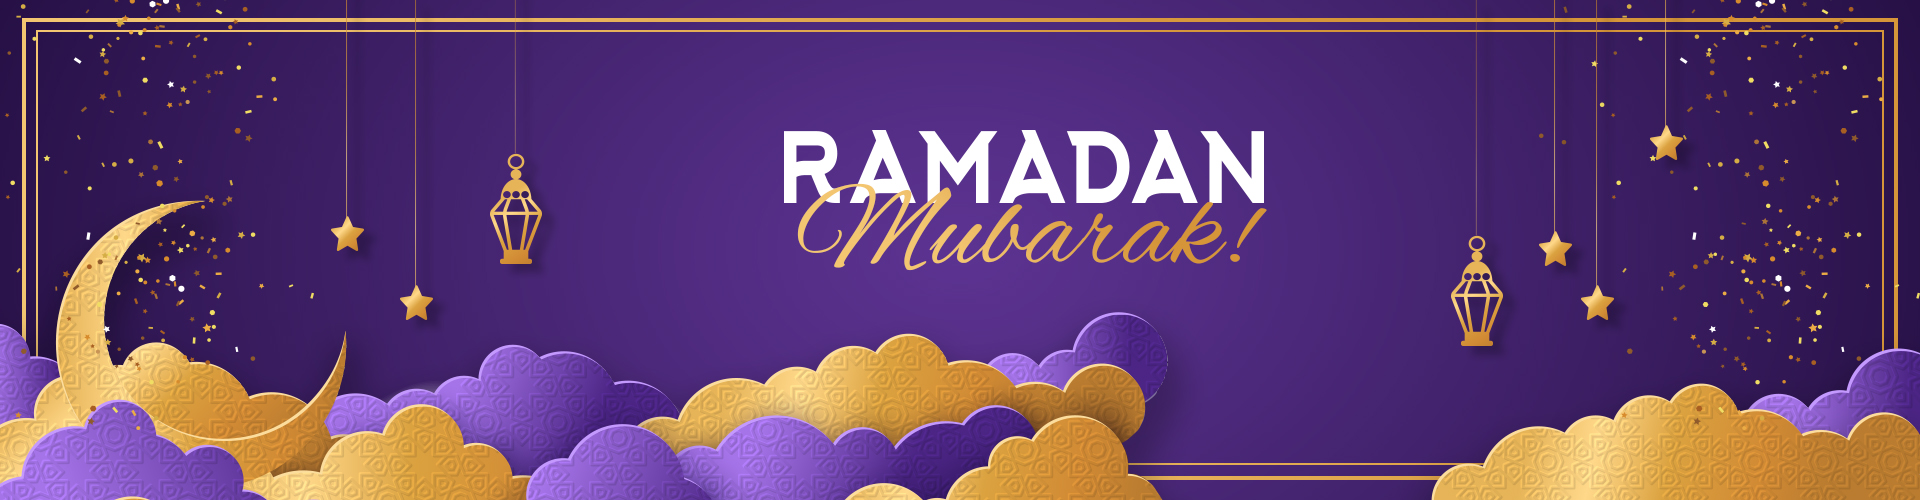 Happy Ramadan! 